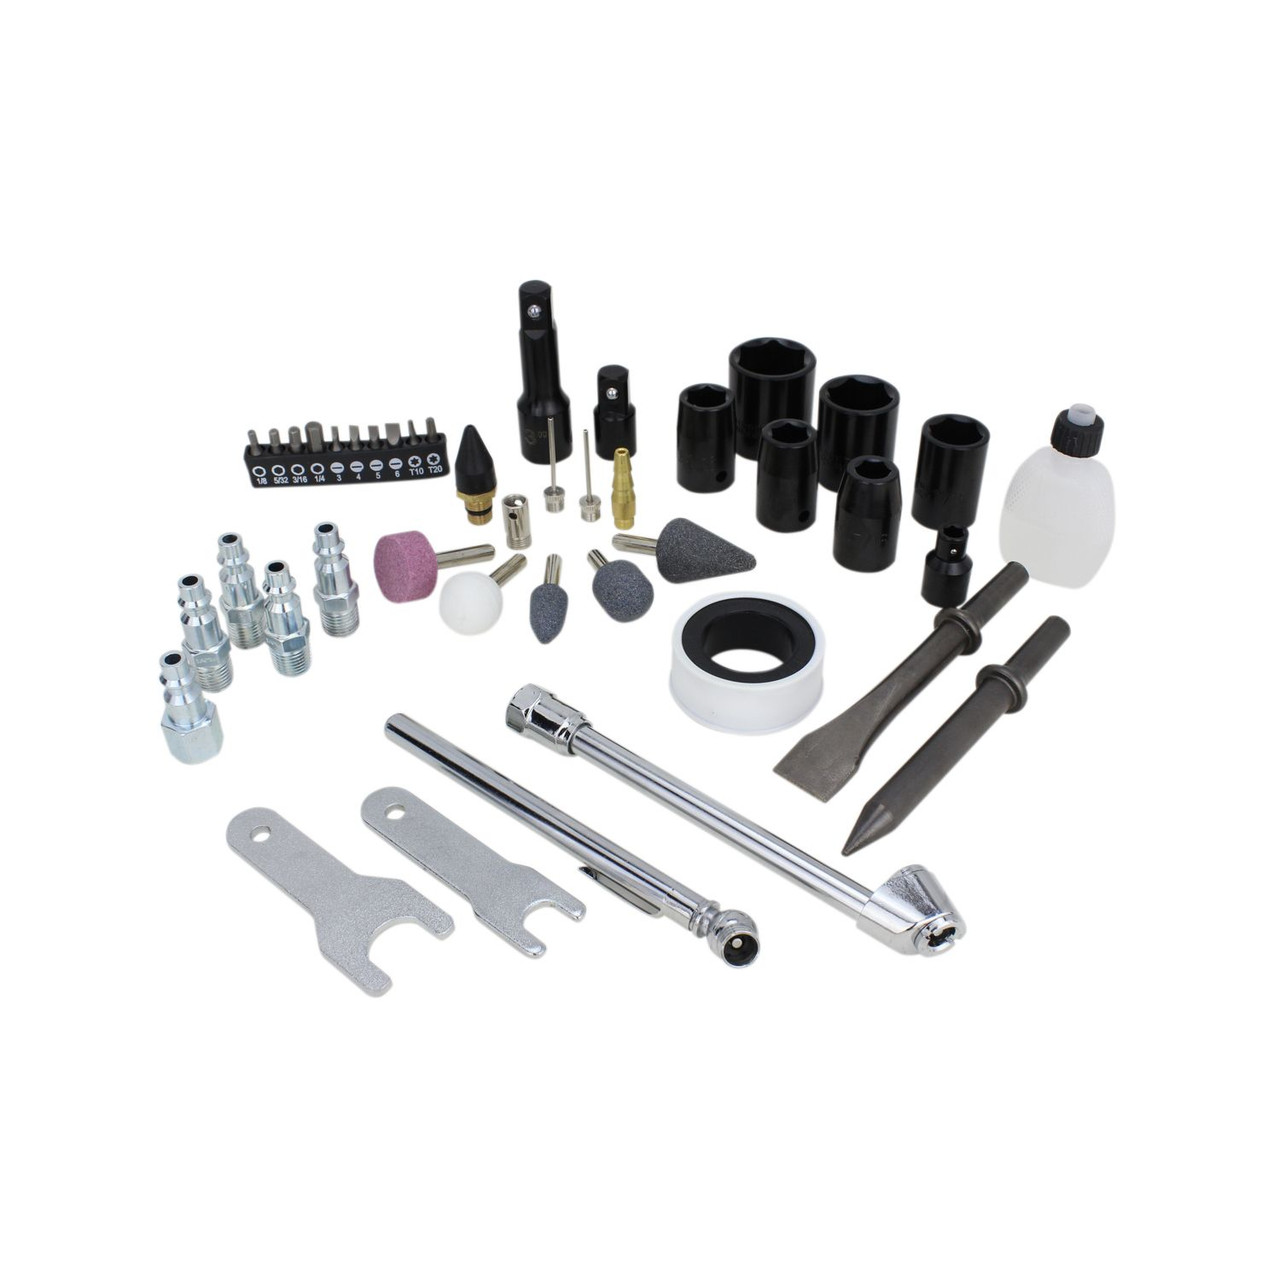 Torque Automotive Air Tools & Accessory Kit